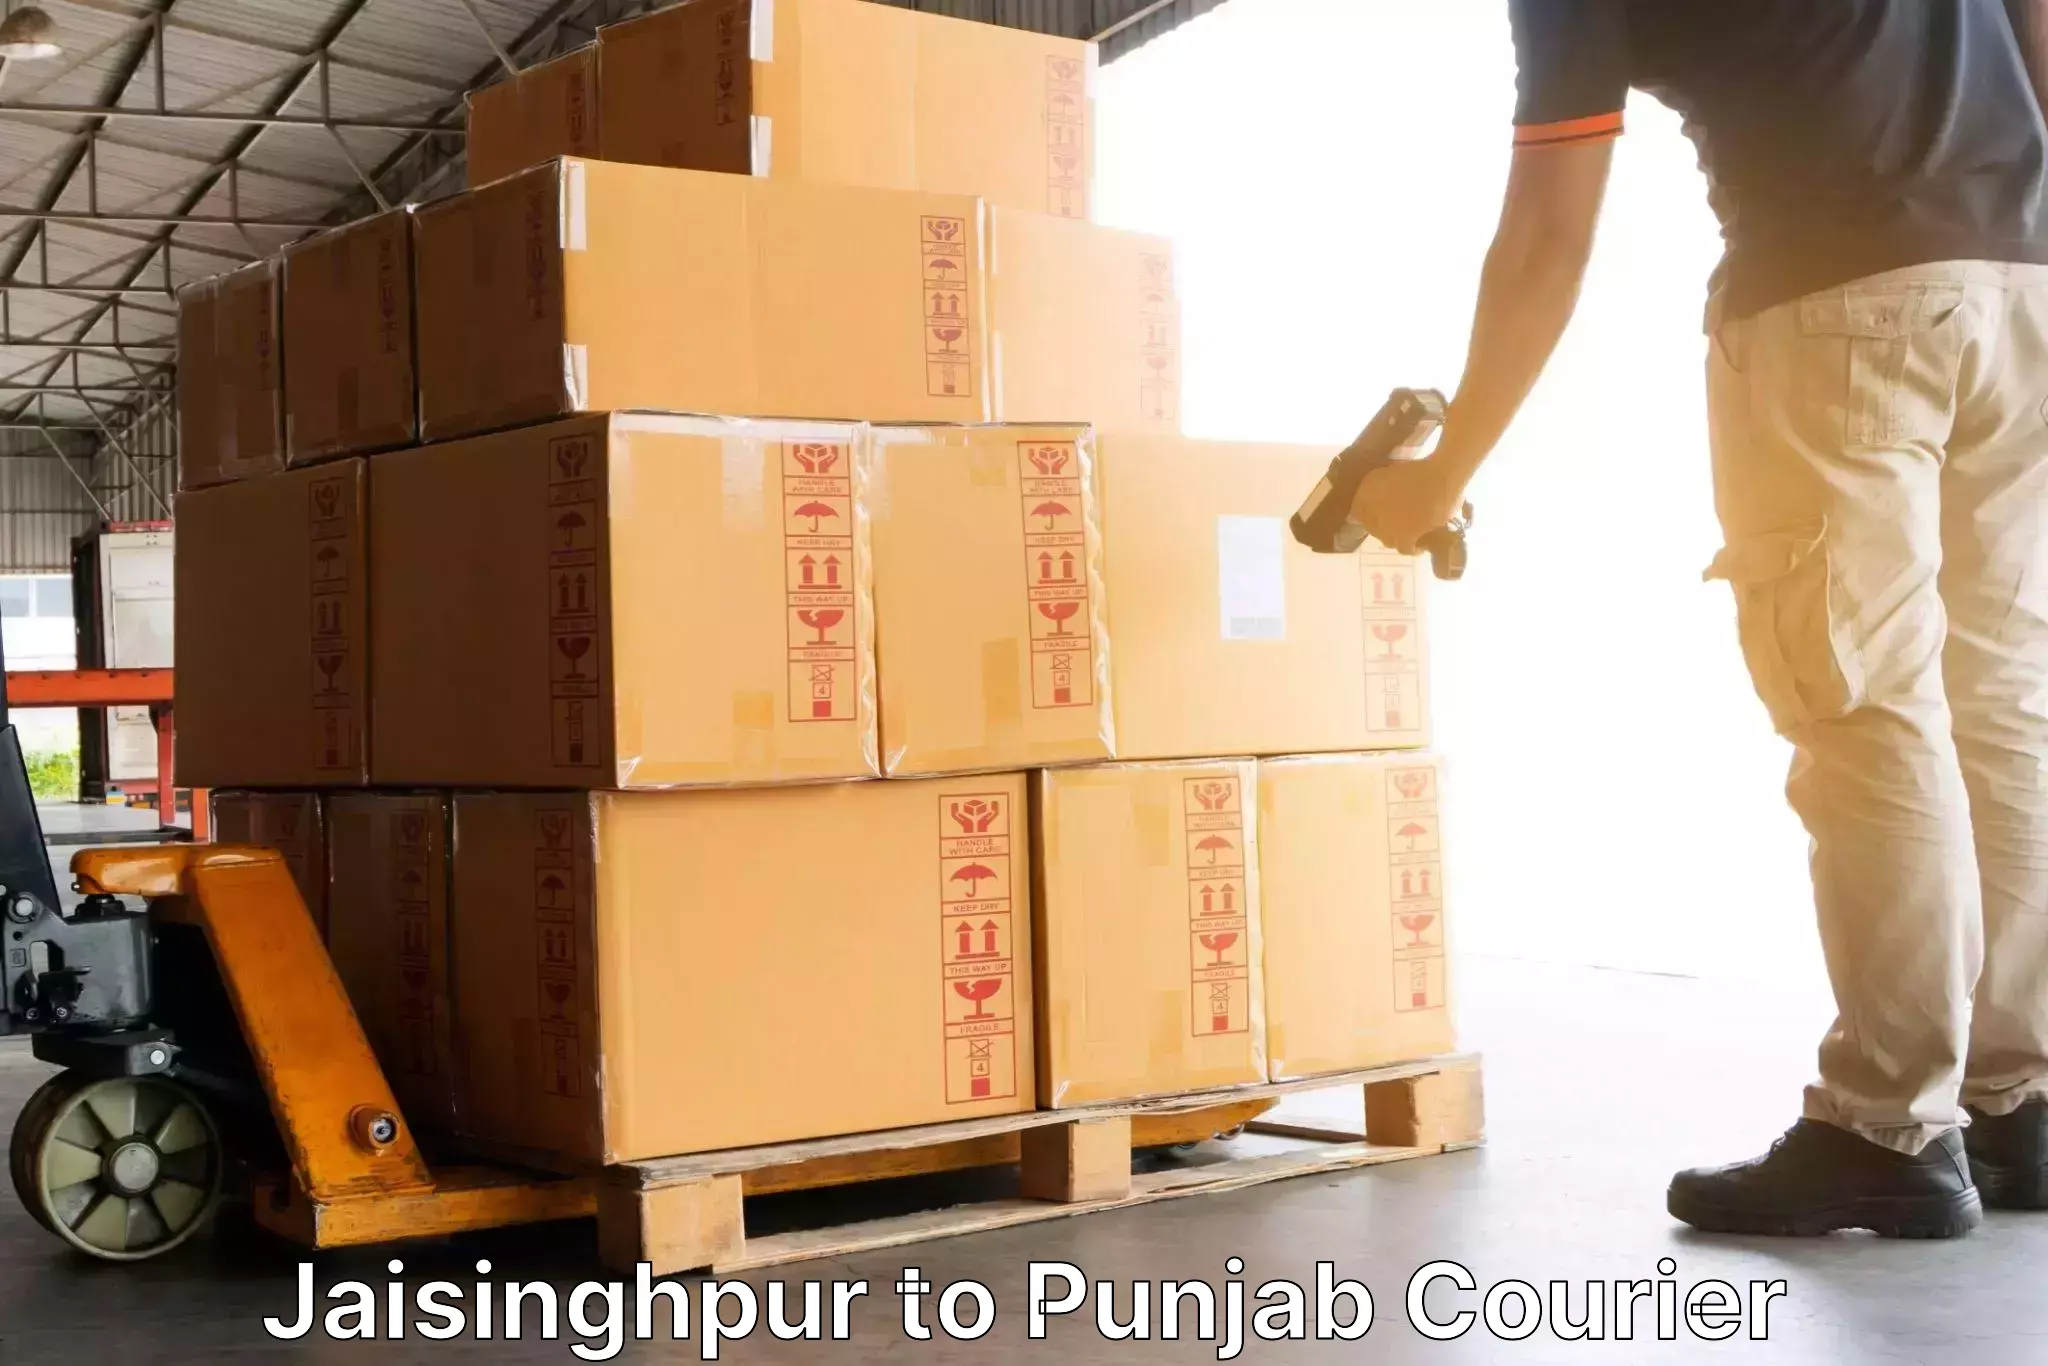 Courier service efficiency Jaisinghpur to Anandpur Sahib